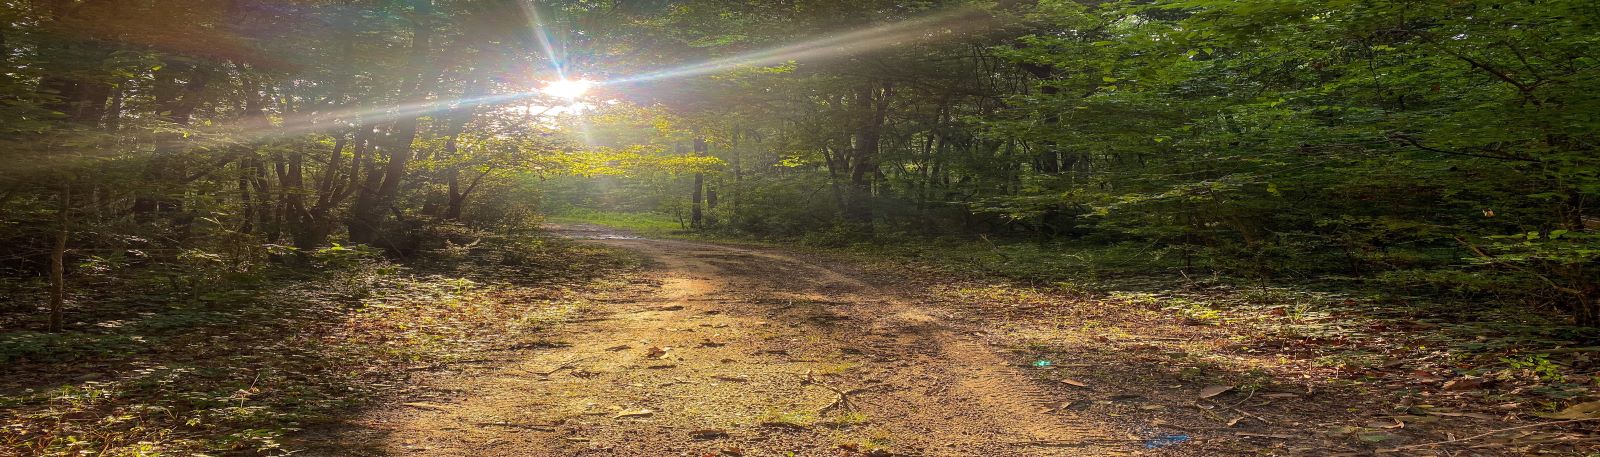 Sunlight shining thru trees on a dirt road